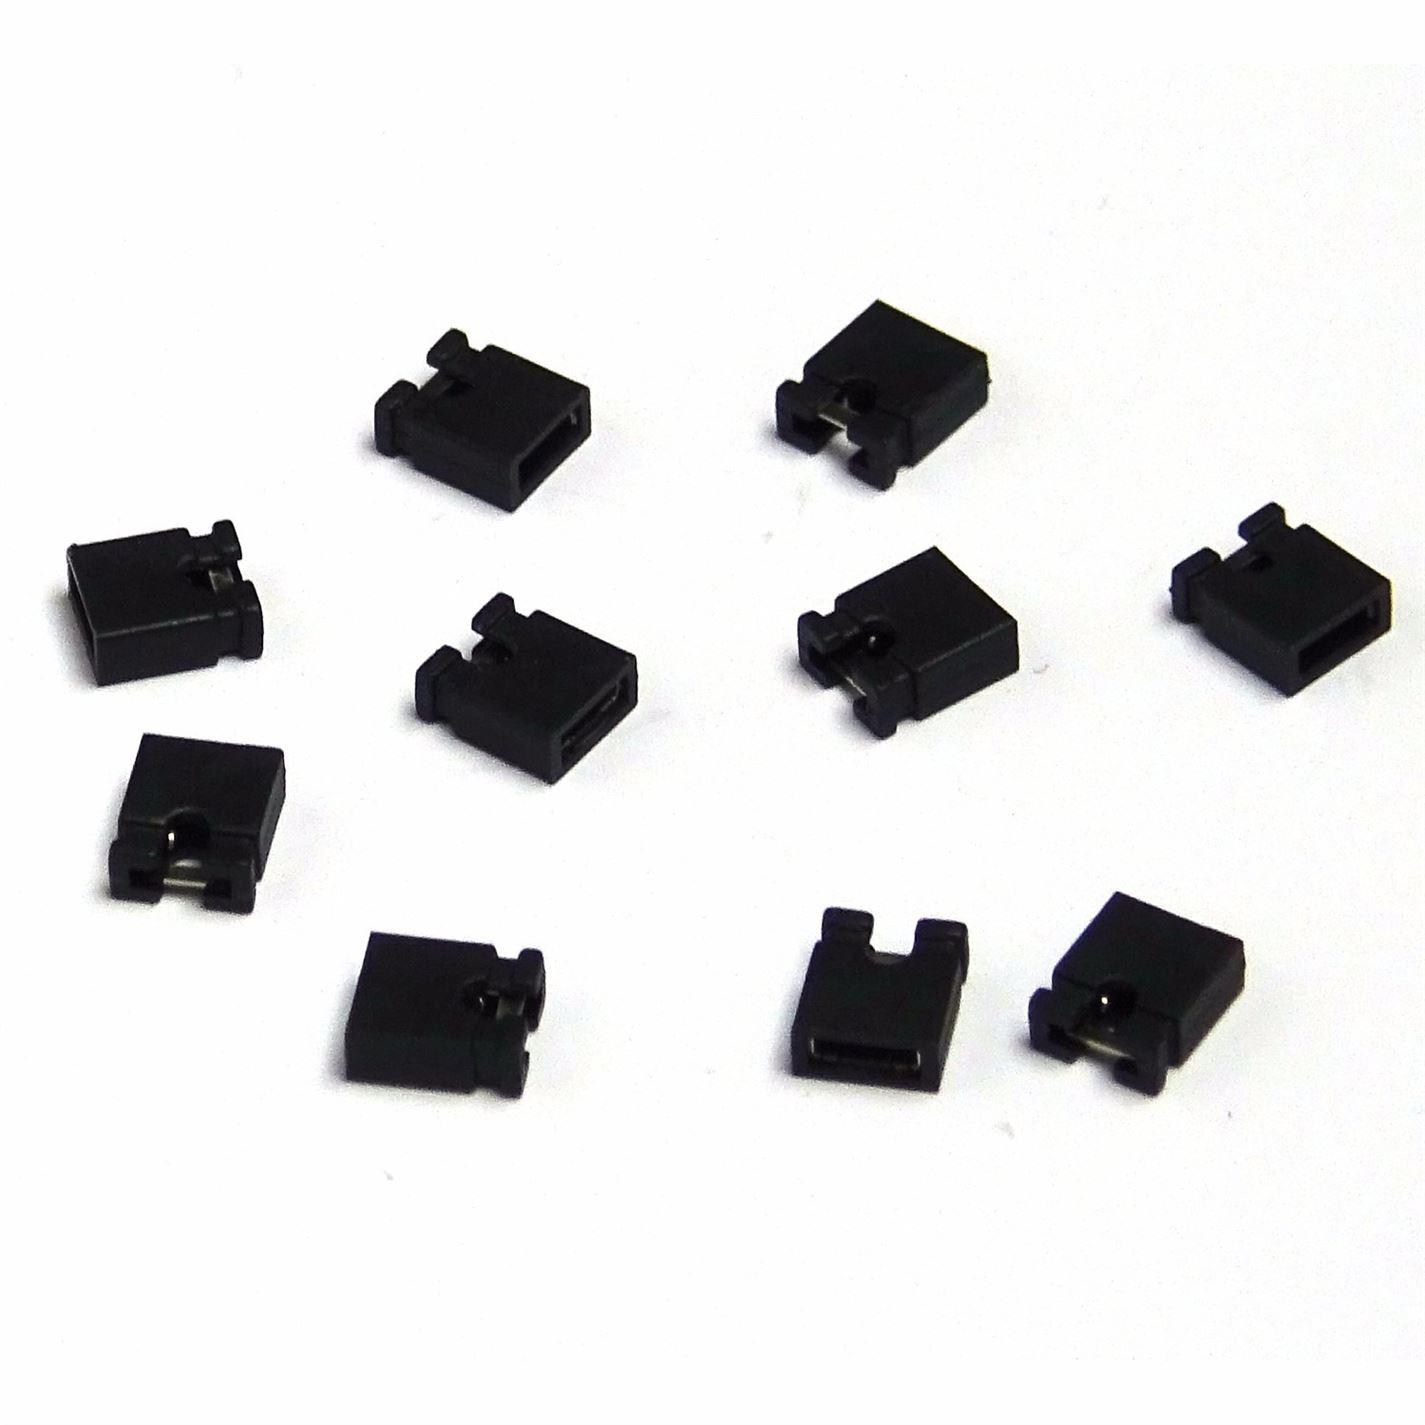 10 x 2.54mm Circuit Board Shunts Short Jumper Cap Mini Micro Header Black - UK Seller